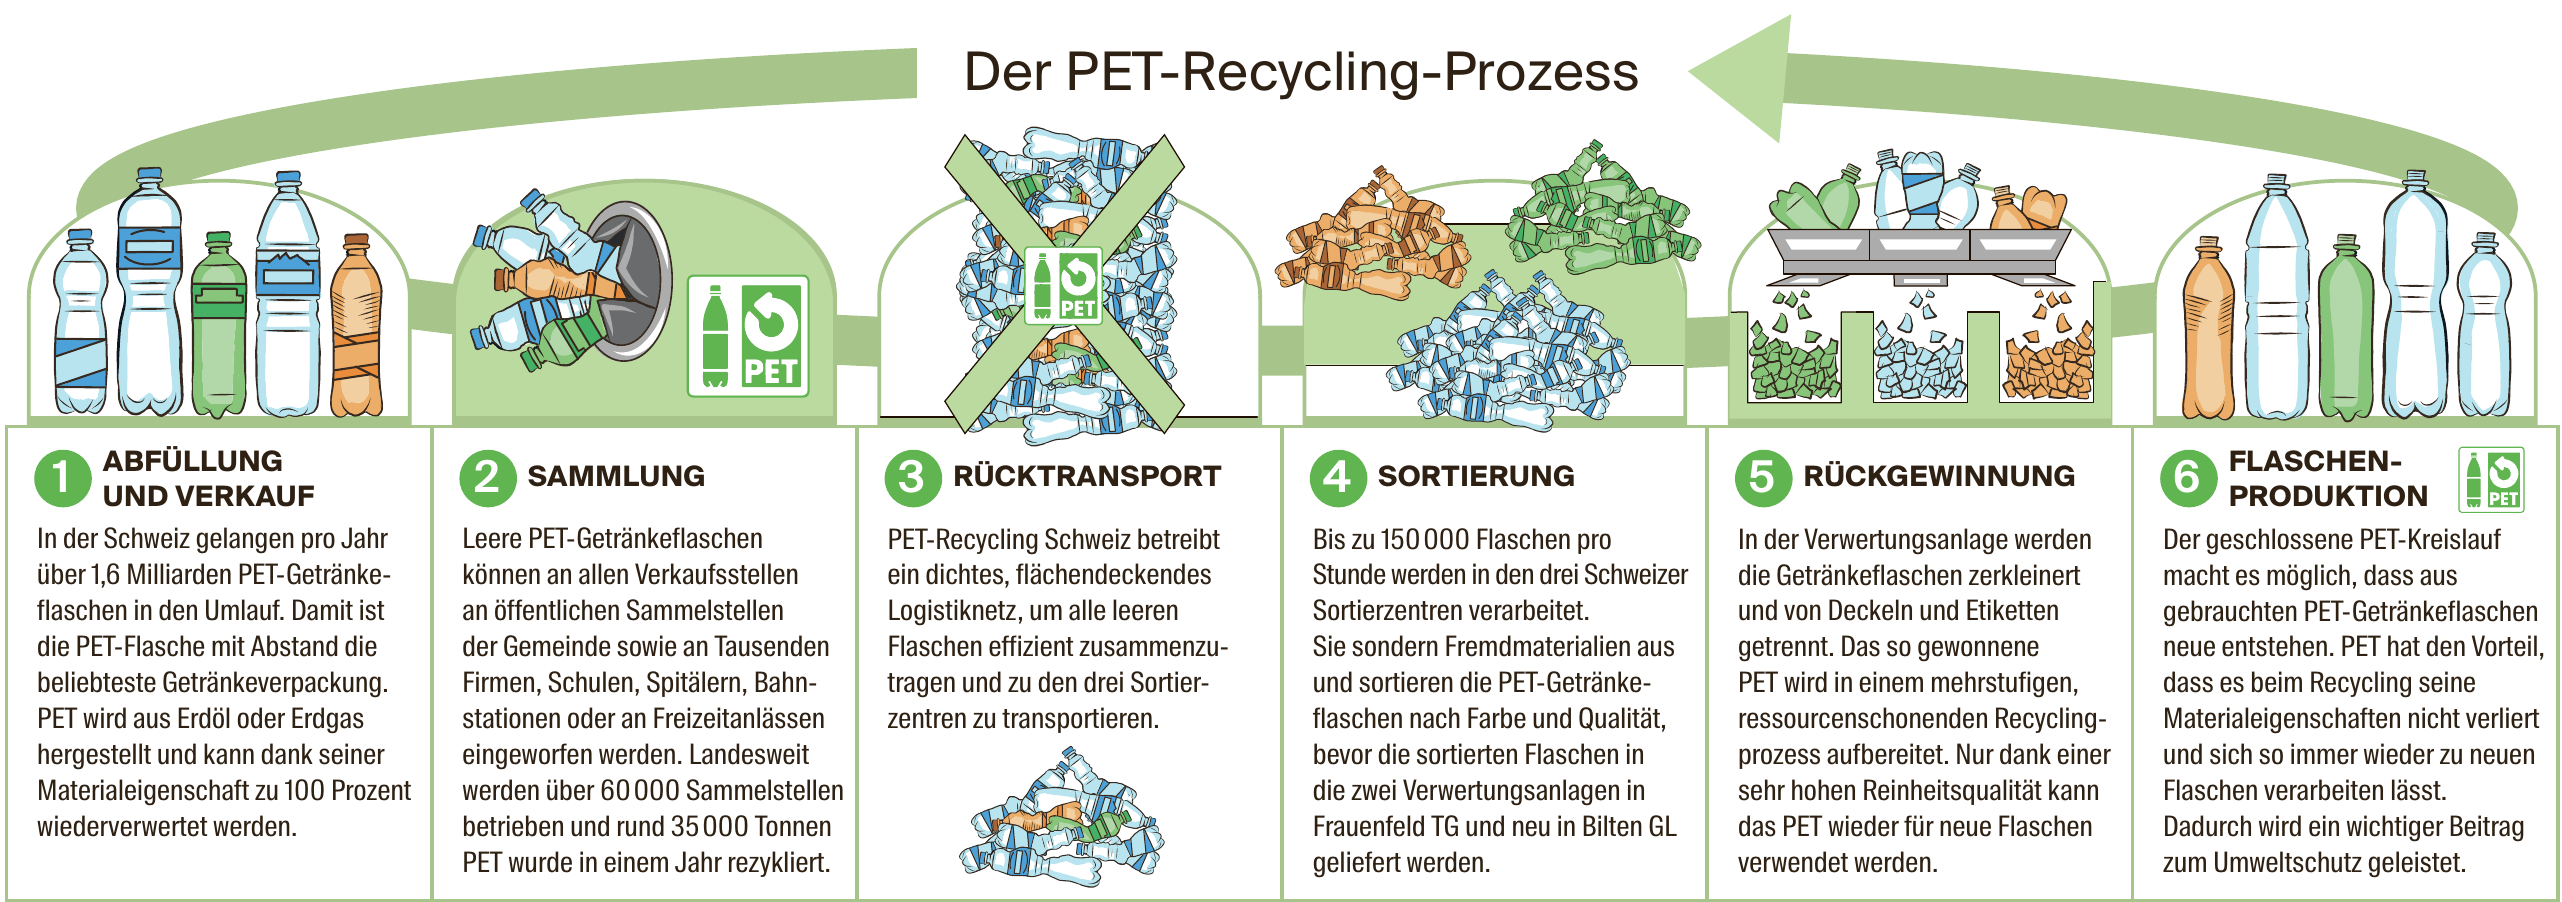 Texte: Monika Burri / Quelle: www.petrecycling.ch Illustration, Grafik: Oliver Marx